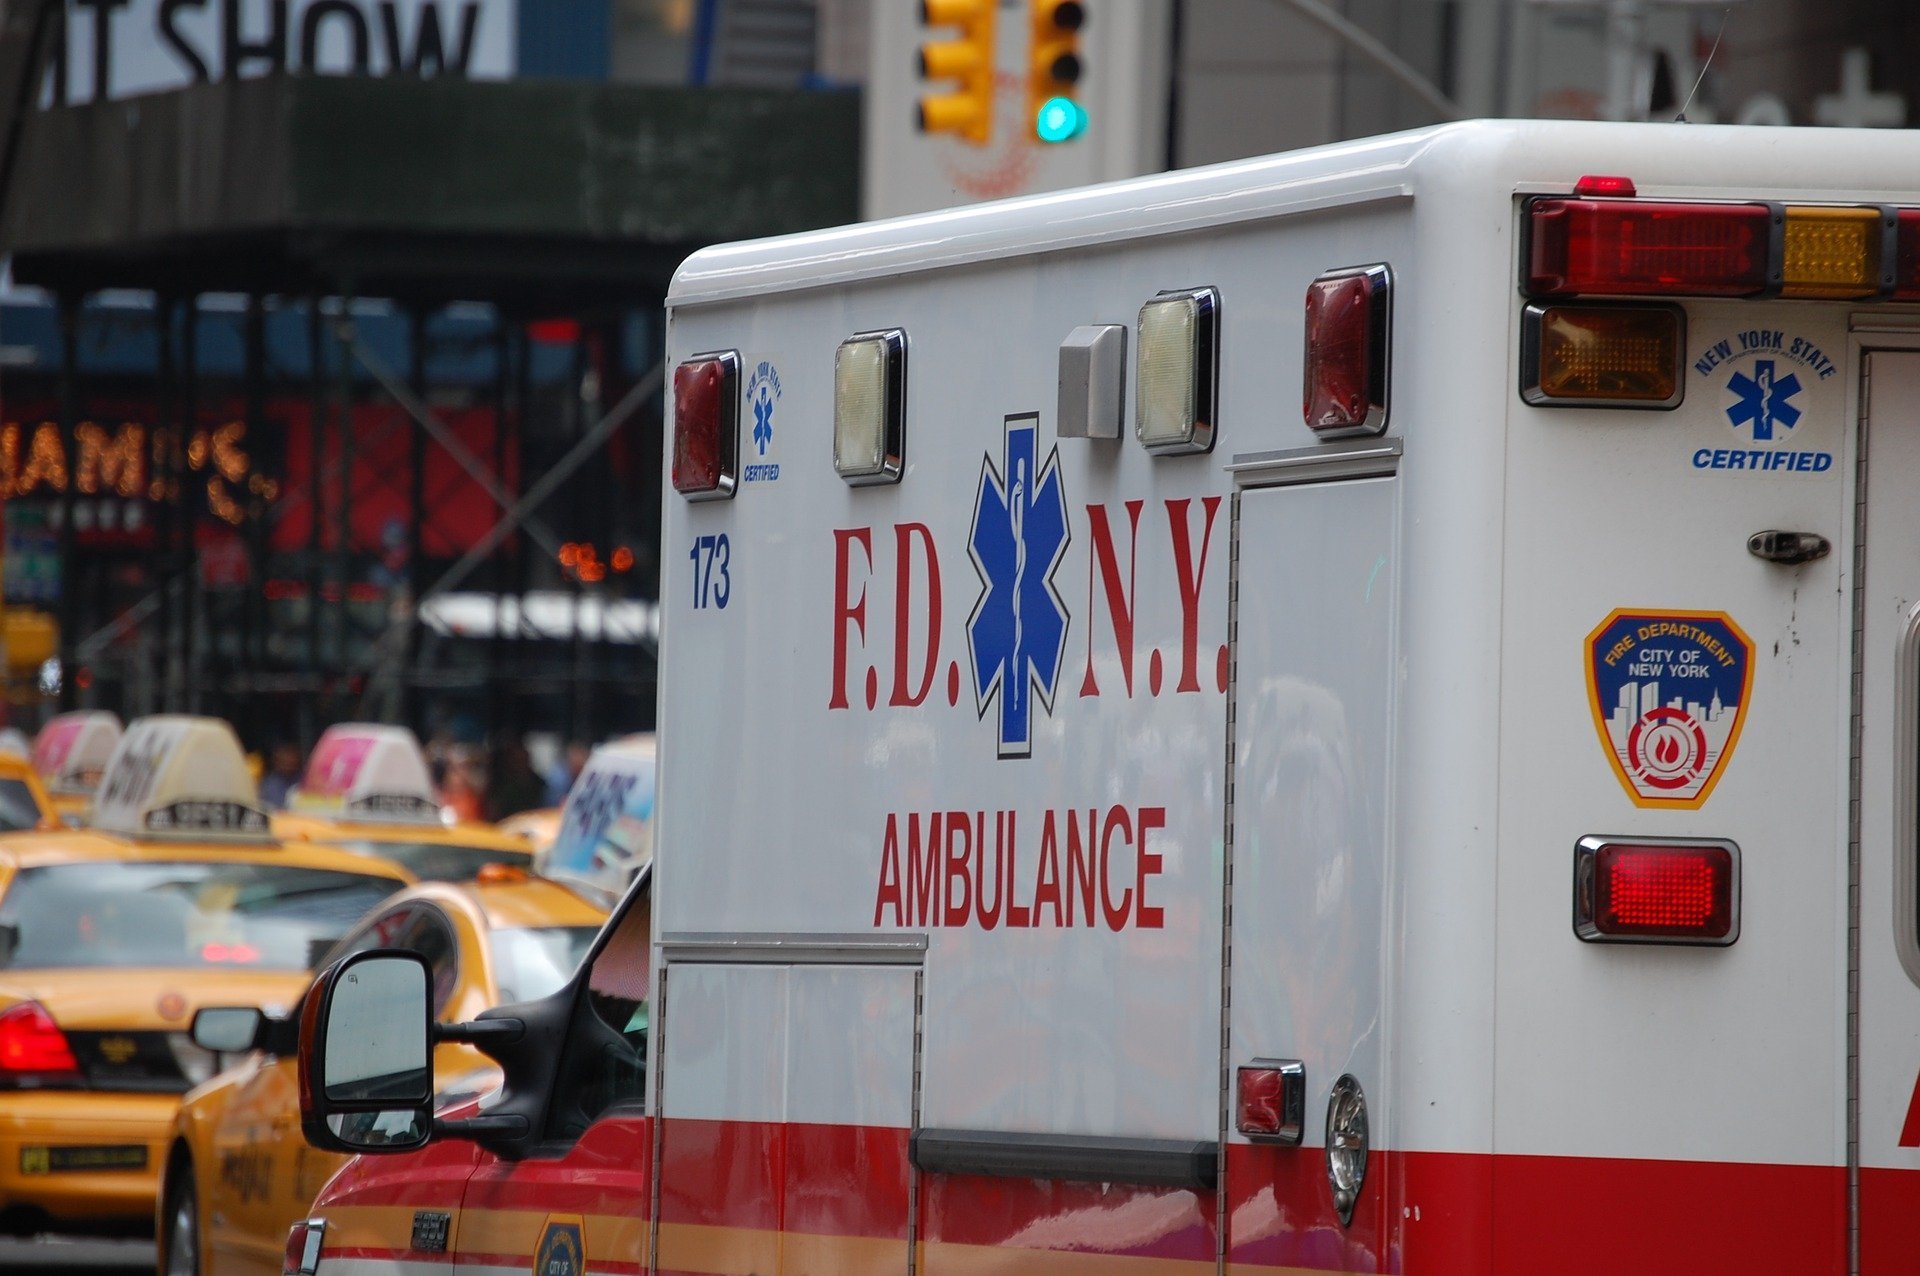 Ambulance in traffic. | Source: alanbatt/Pixabay